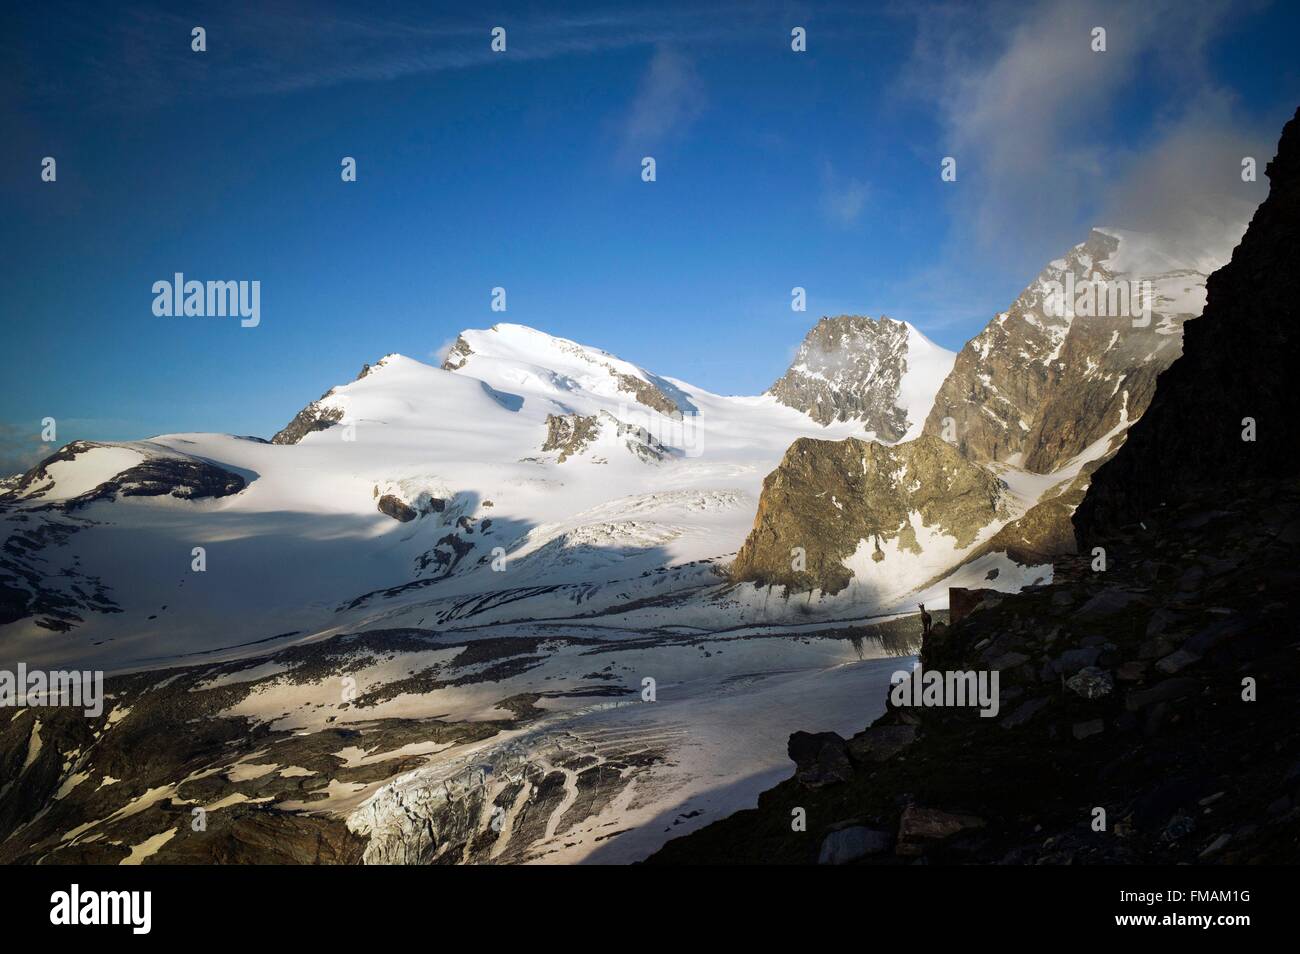 La Svizzera nel canton Vallese, Valle di Saas, Saas Fee, Brittania rifugio 3030 m, Strahlhorn 4190 m Foto Stock